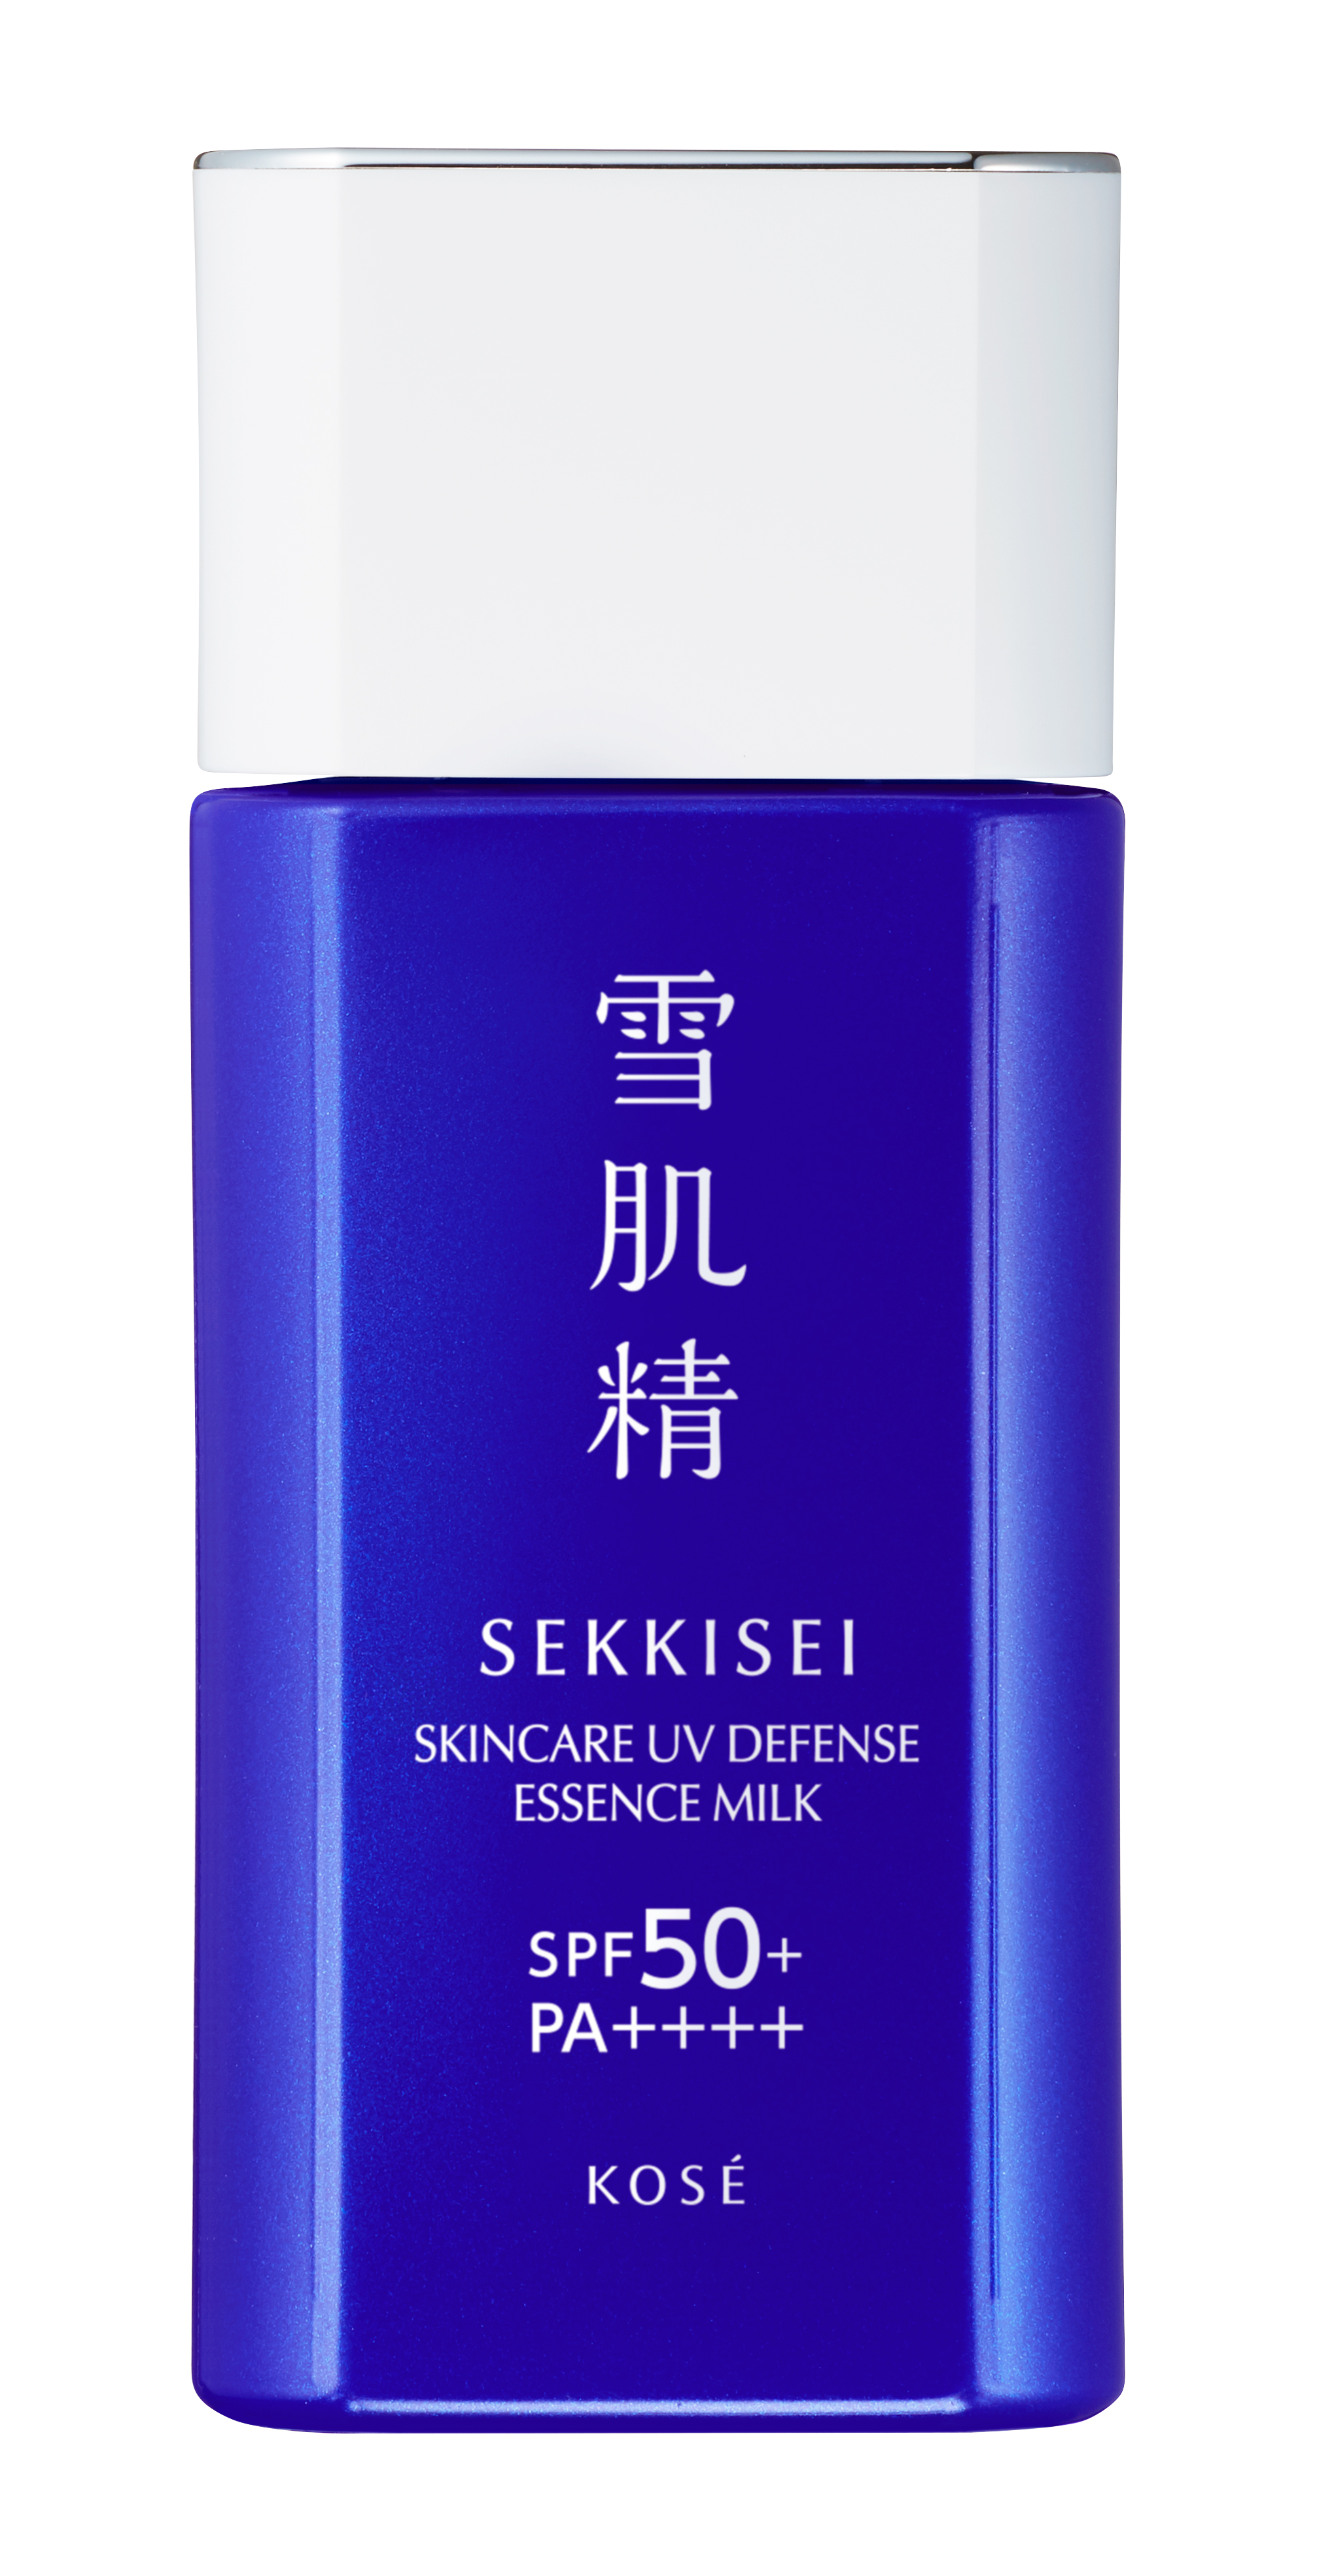 kose-sekkisei-skincare-uv-defense-essence-milk-60g